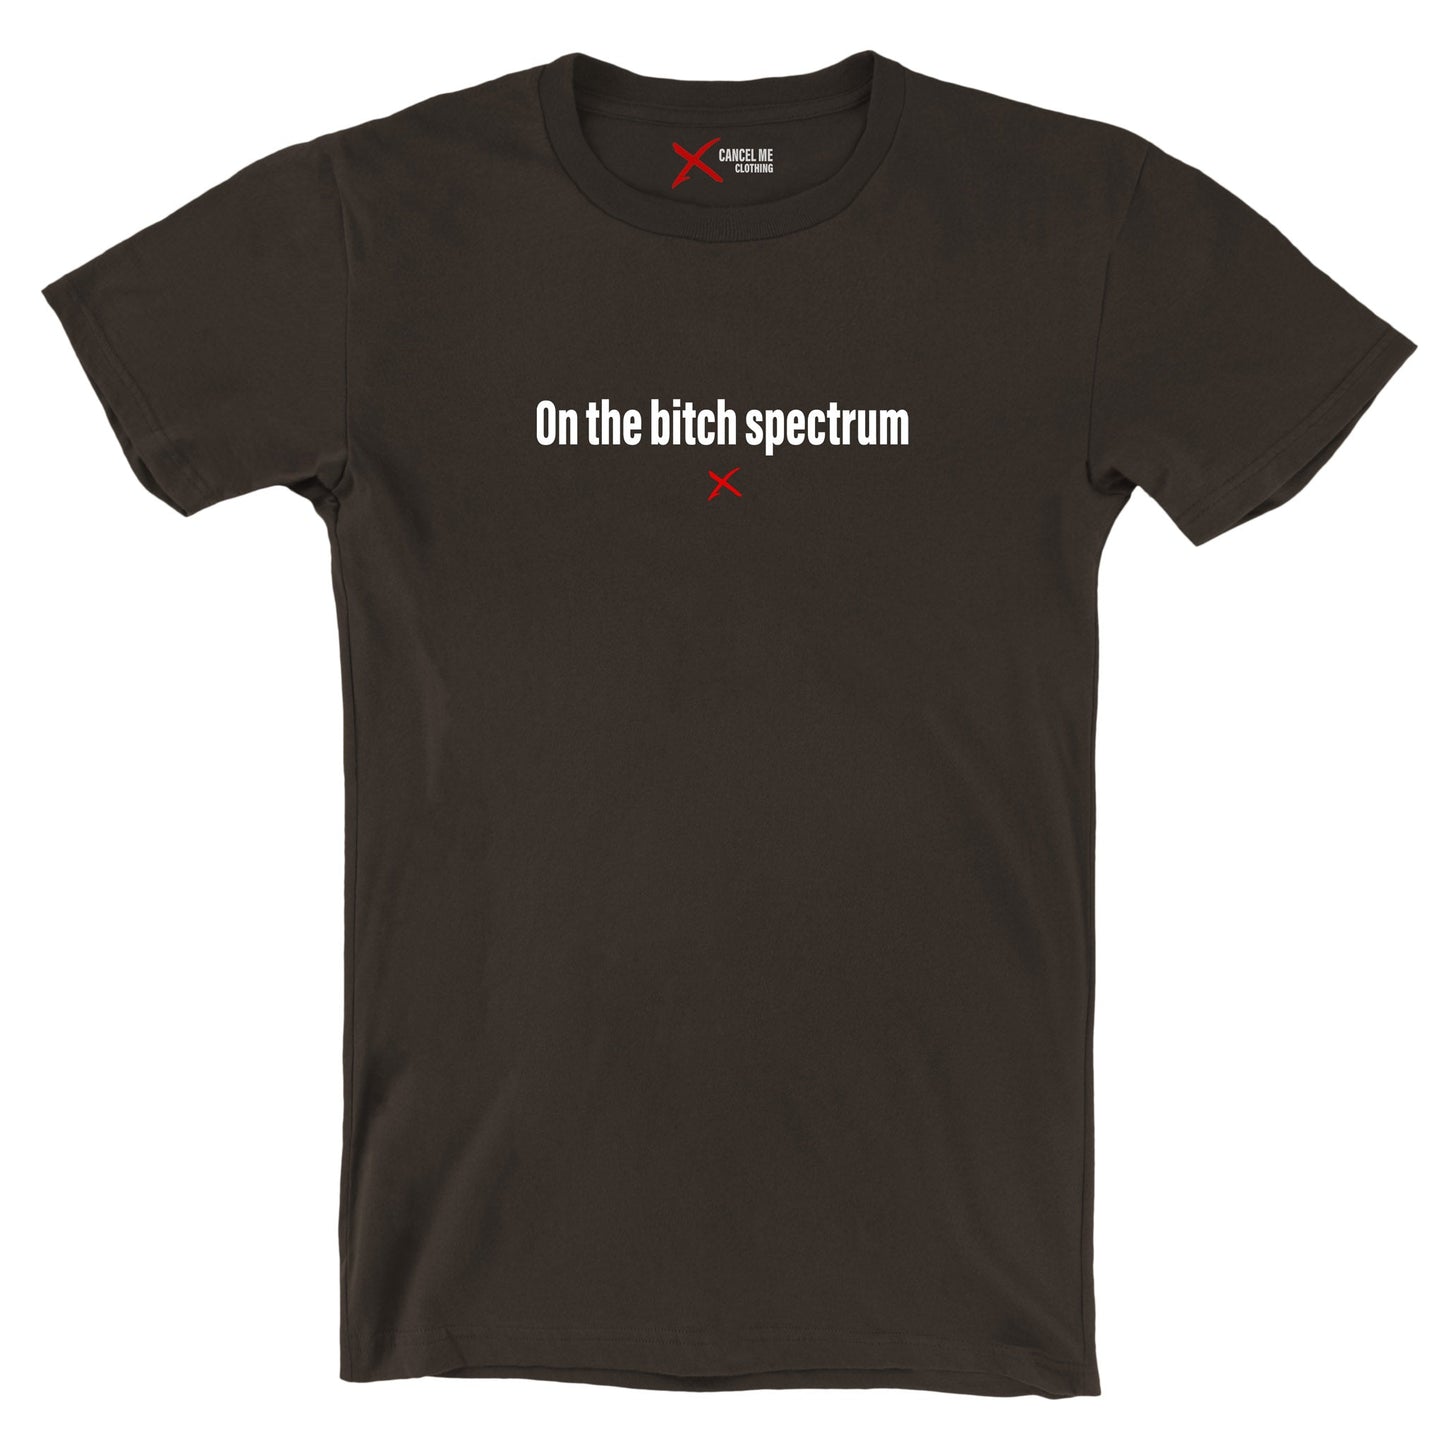 On the bitch spectrum - Shirt